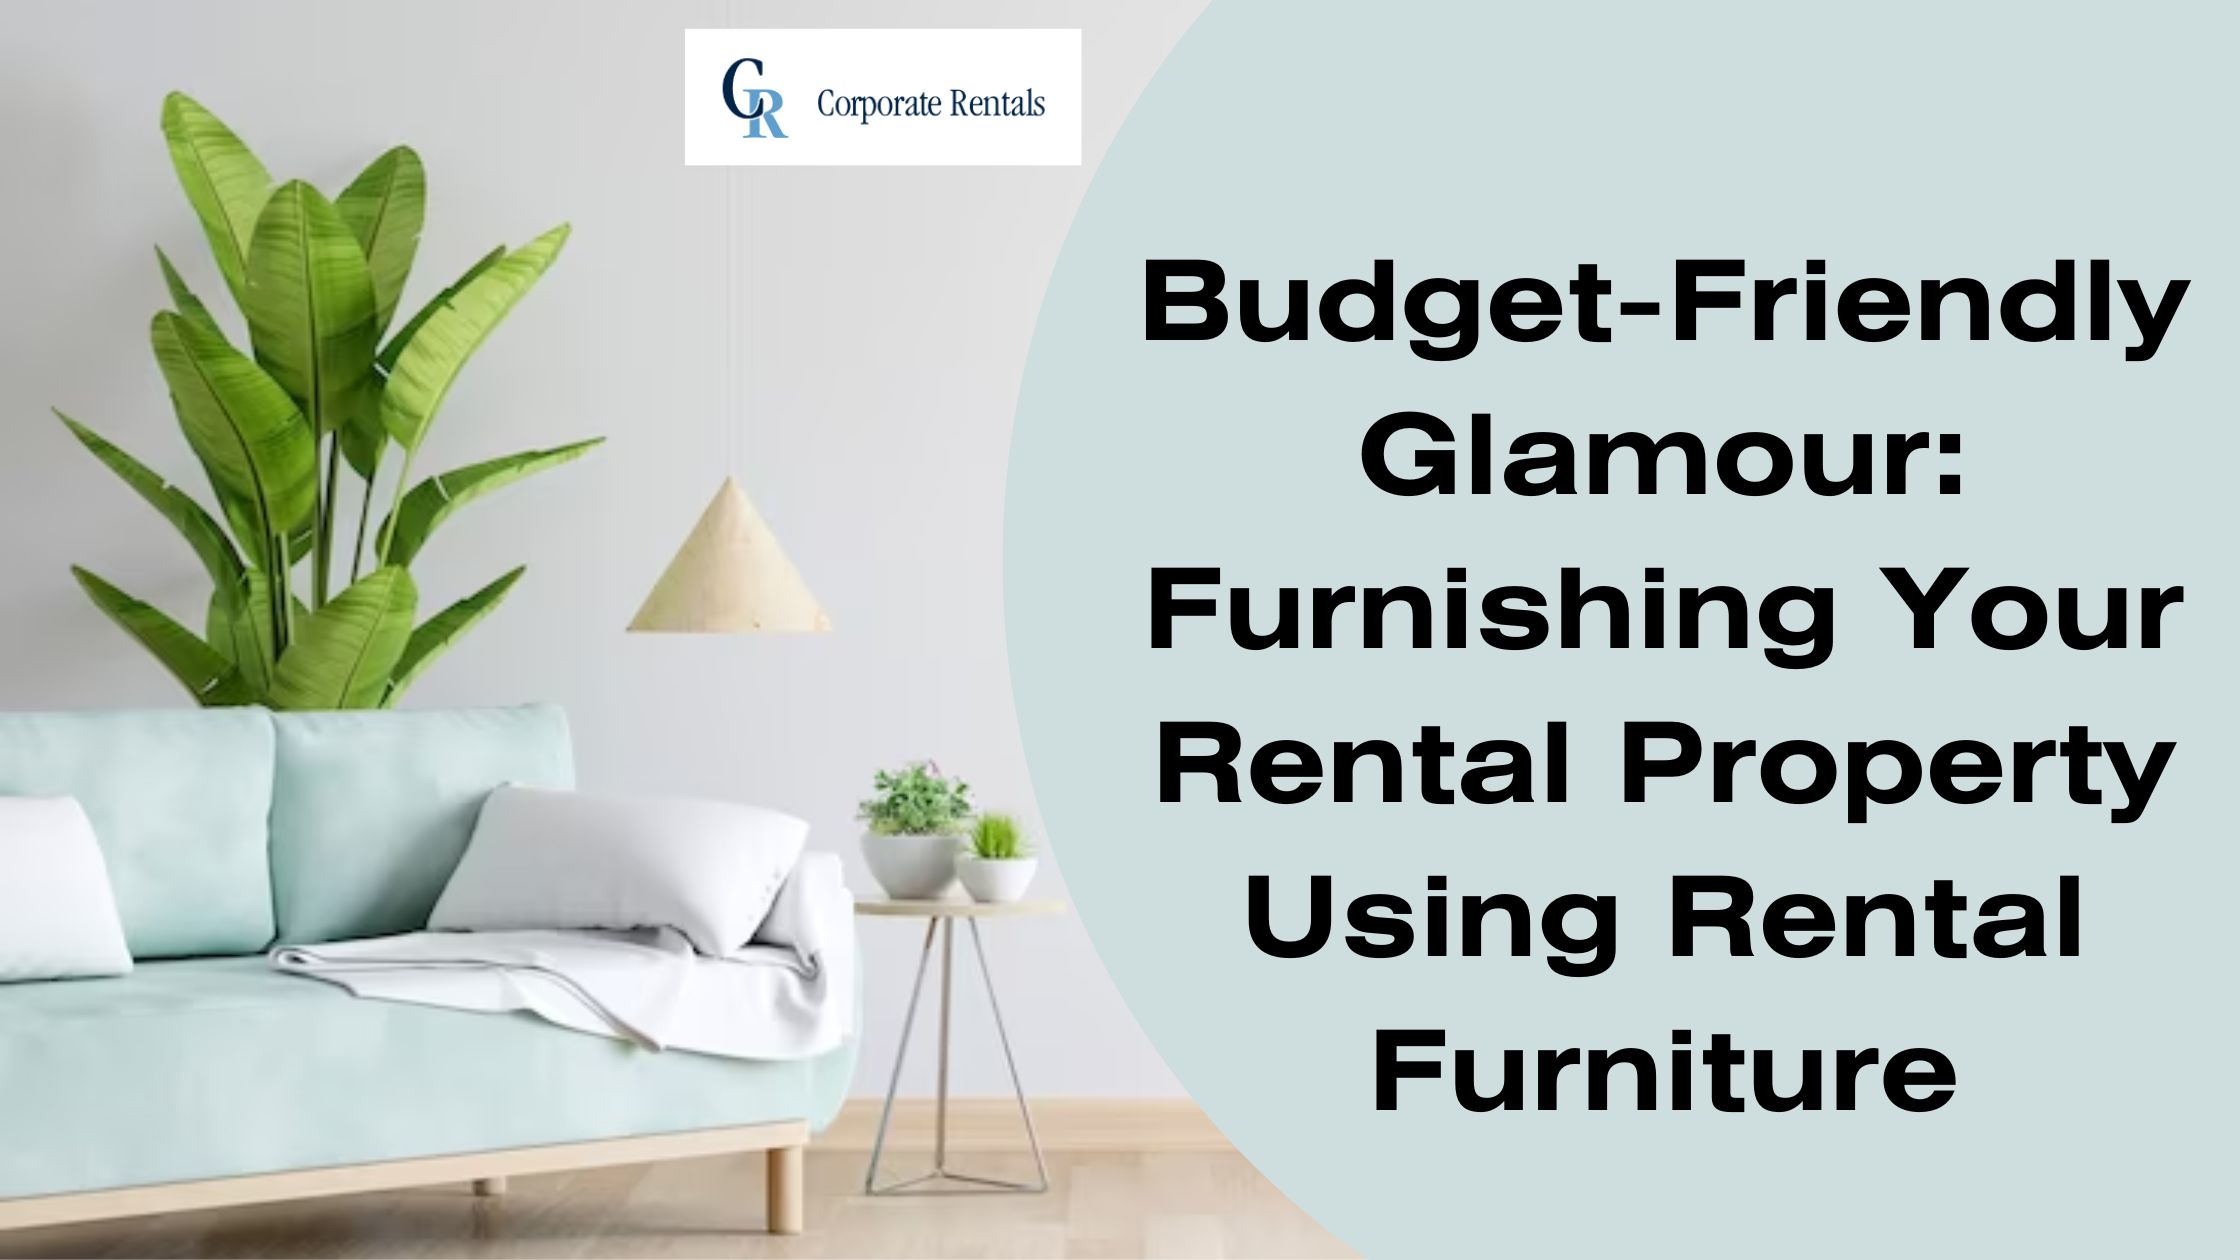 Budget-Friendly Glamour: Furnishing Your Rental Property Using Rental Furniture